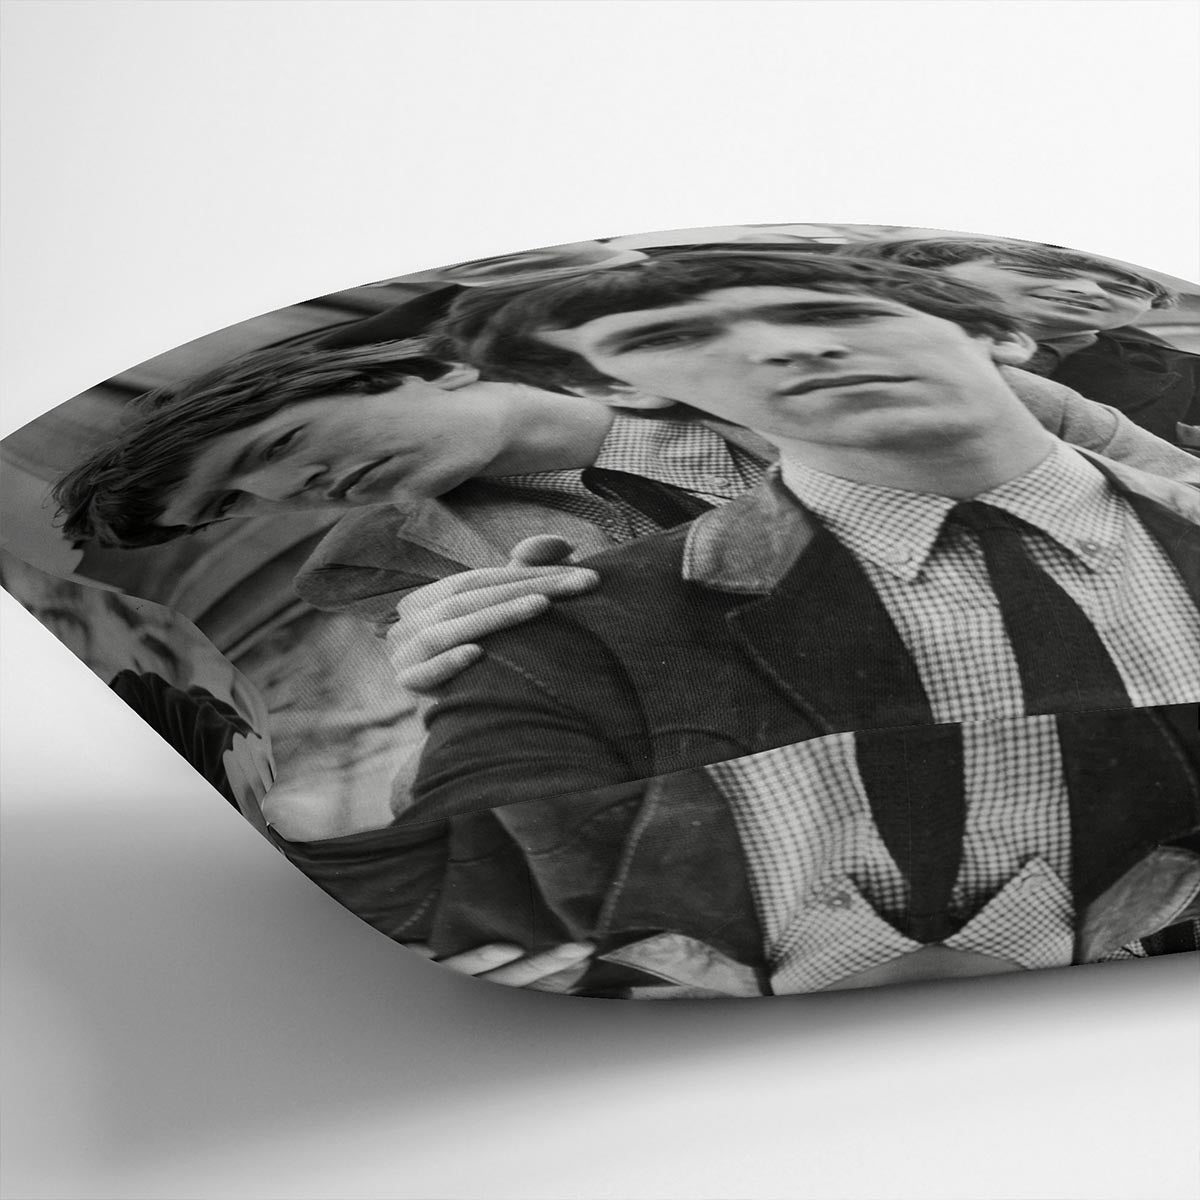 The Spencer Davis Group Cushion